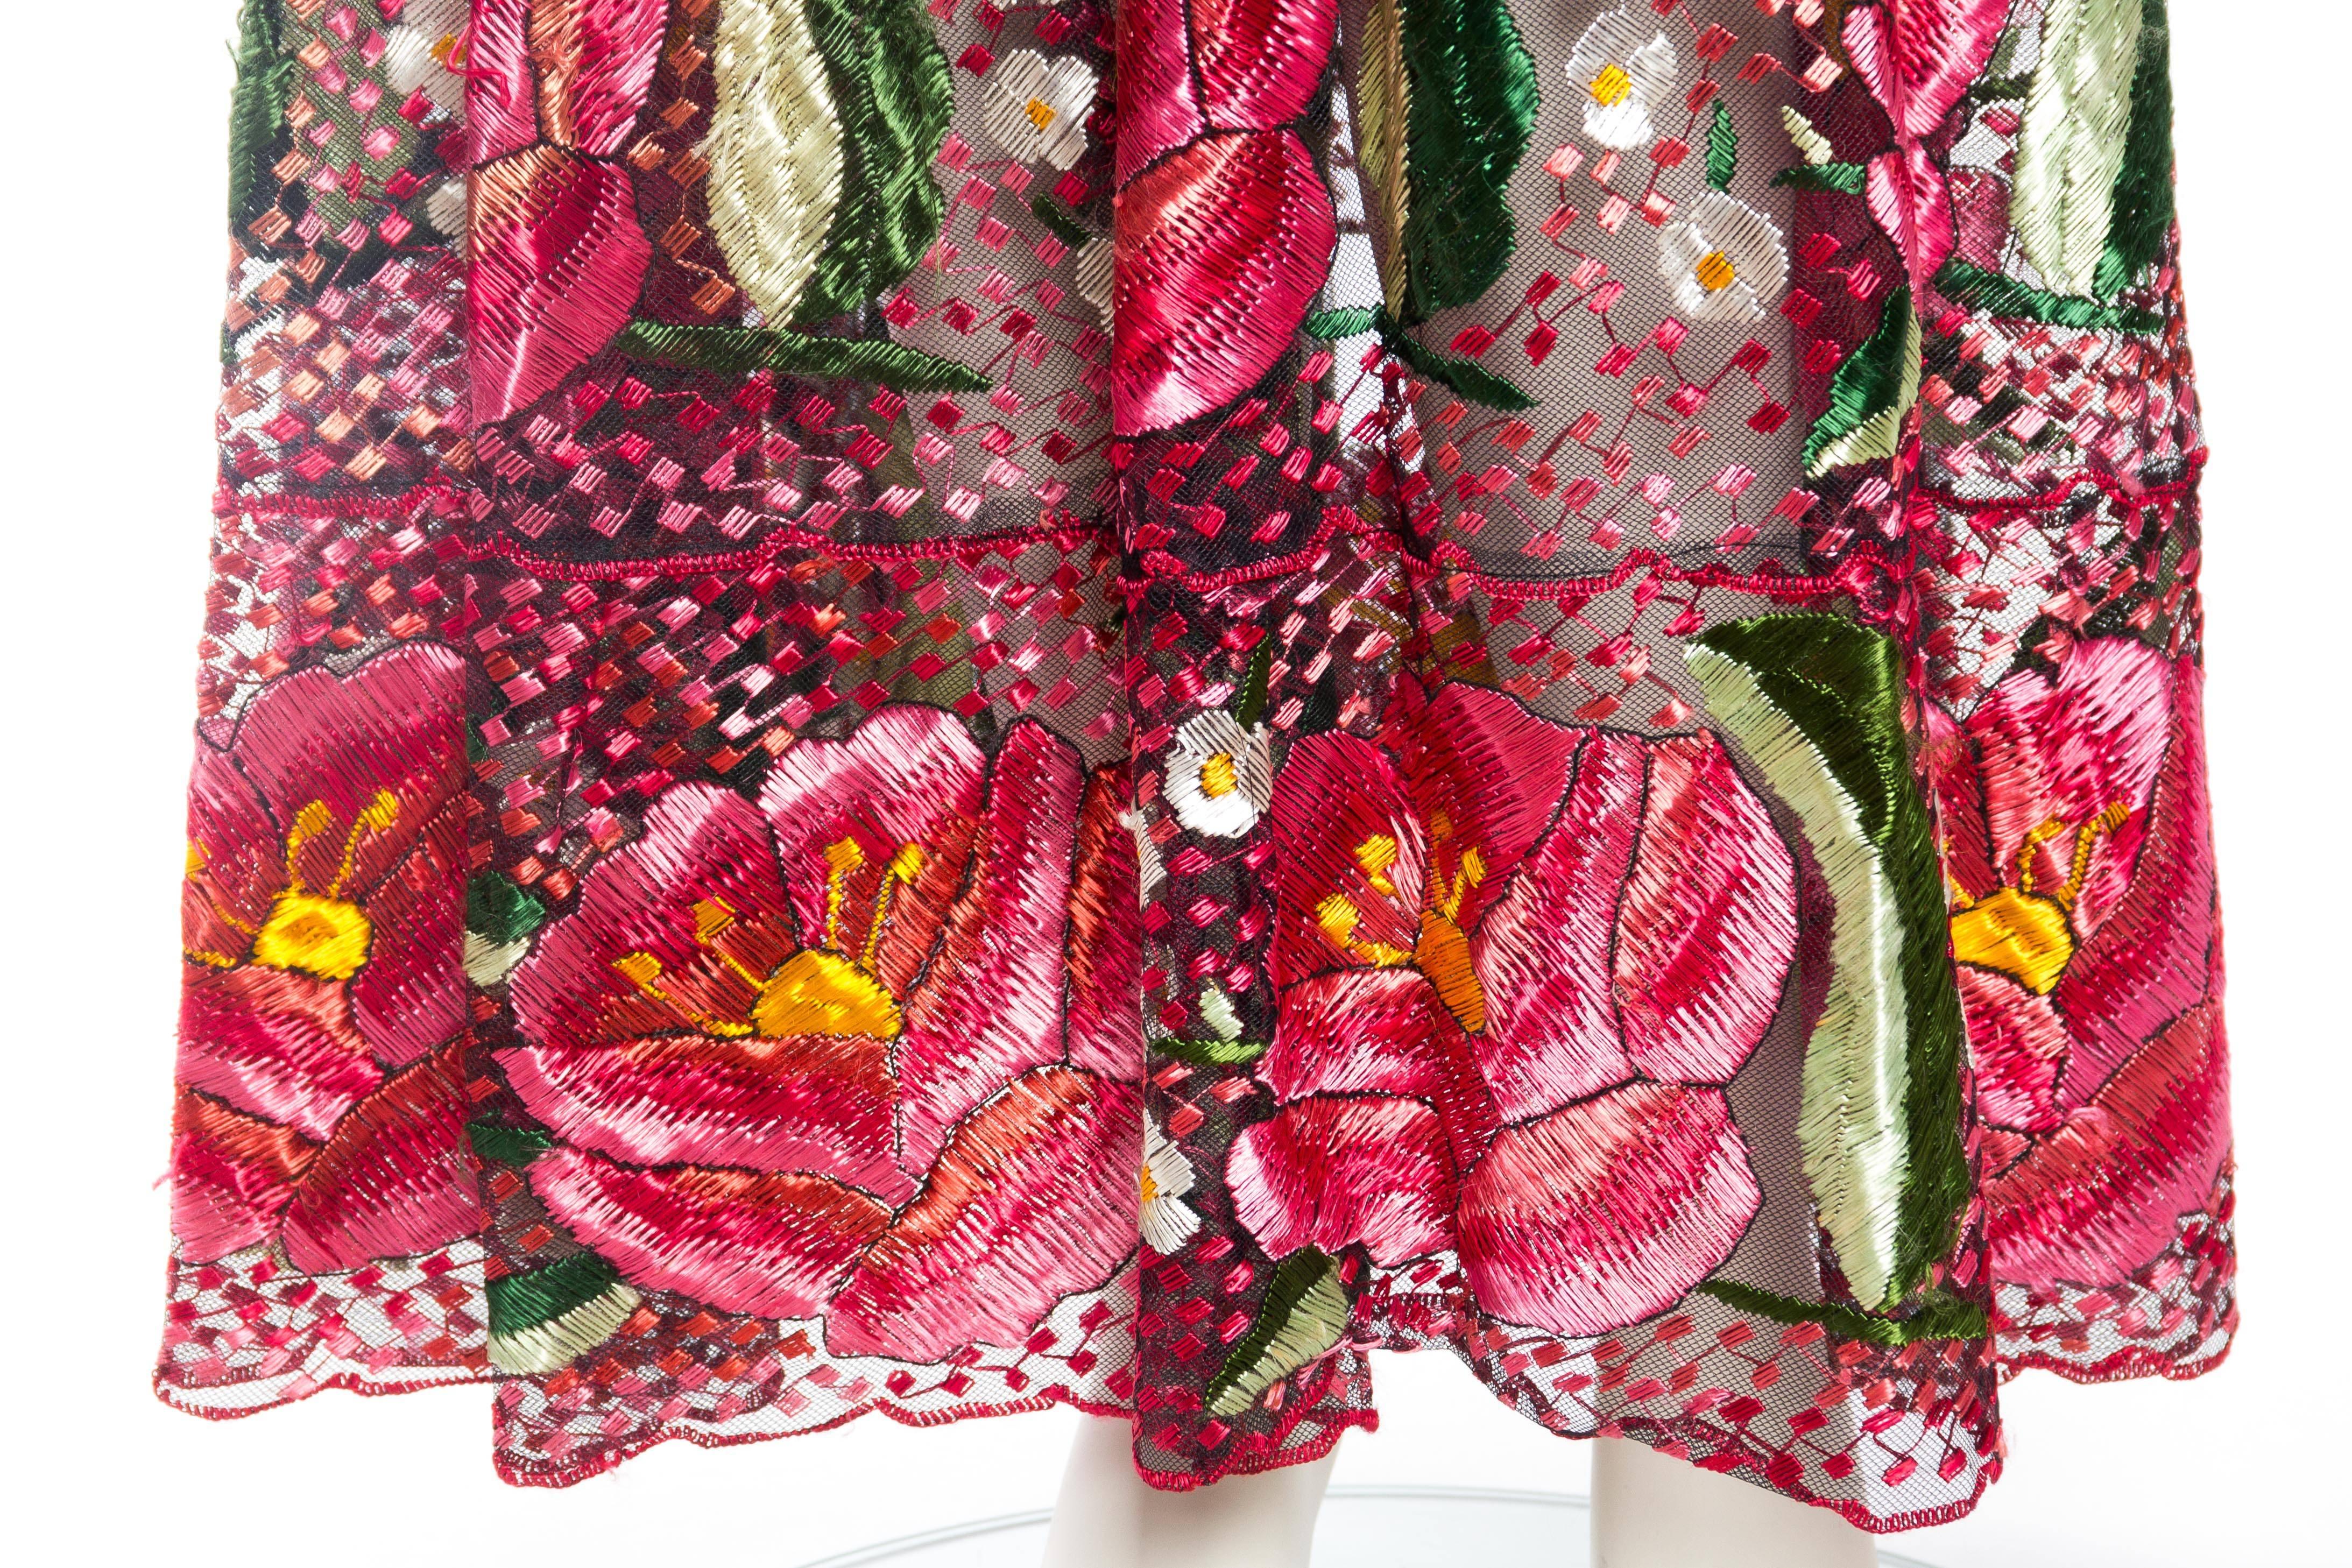 Bohemian Inspired Fully Embroidered Sheer Net Dress 4